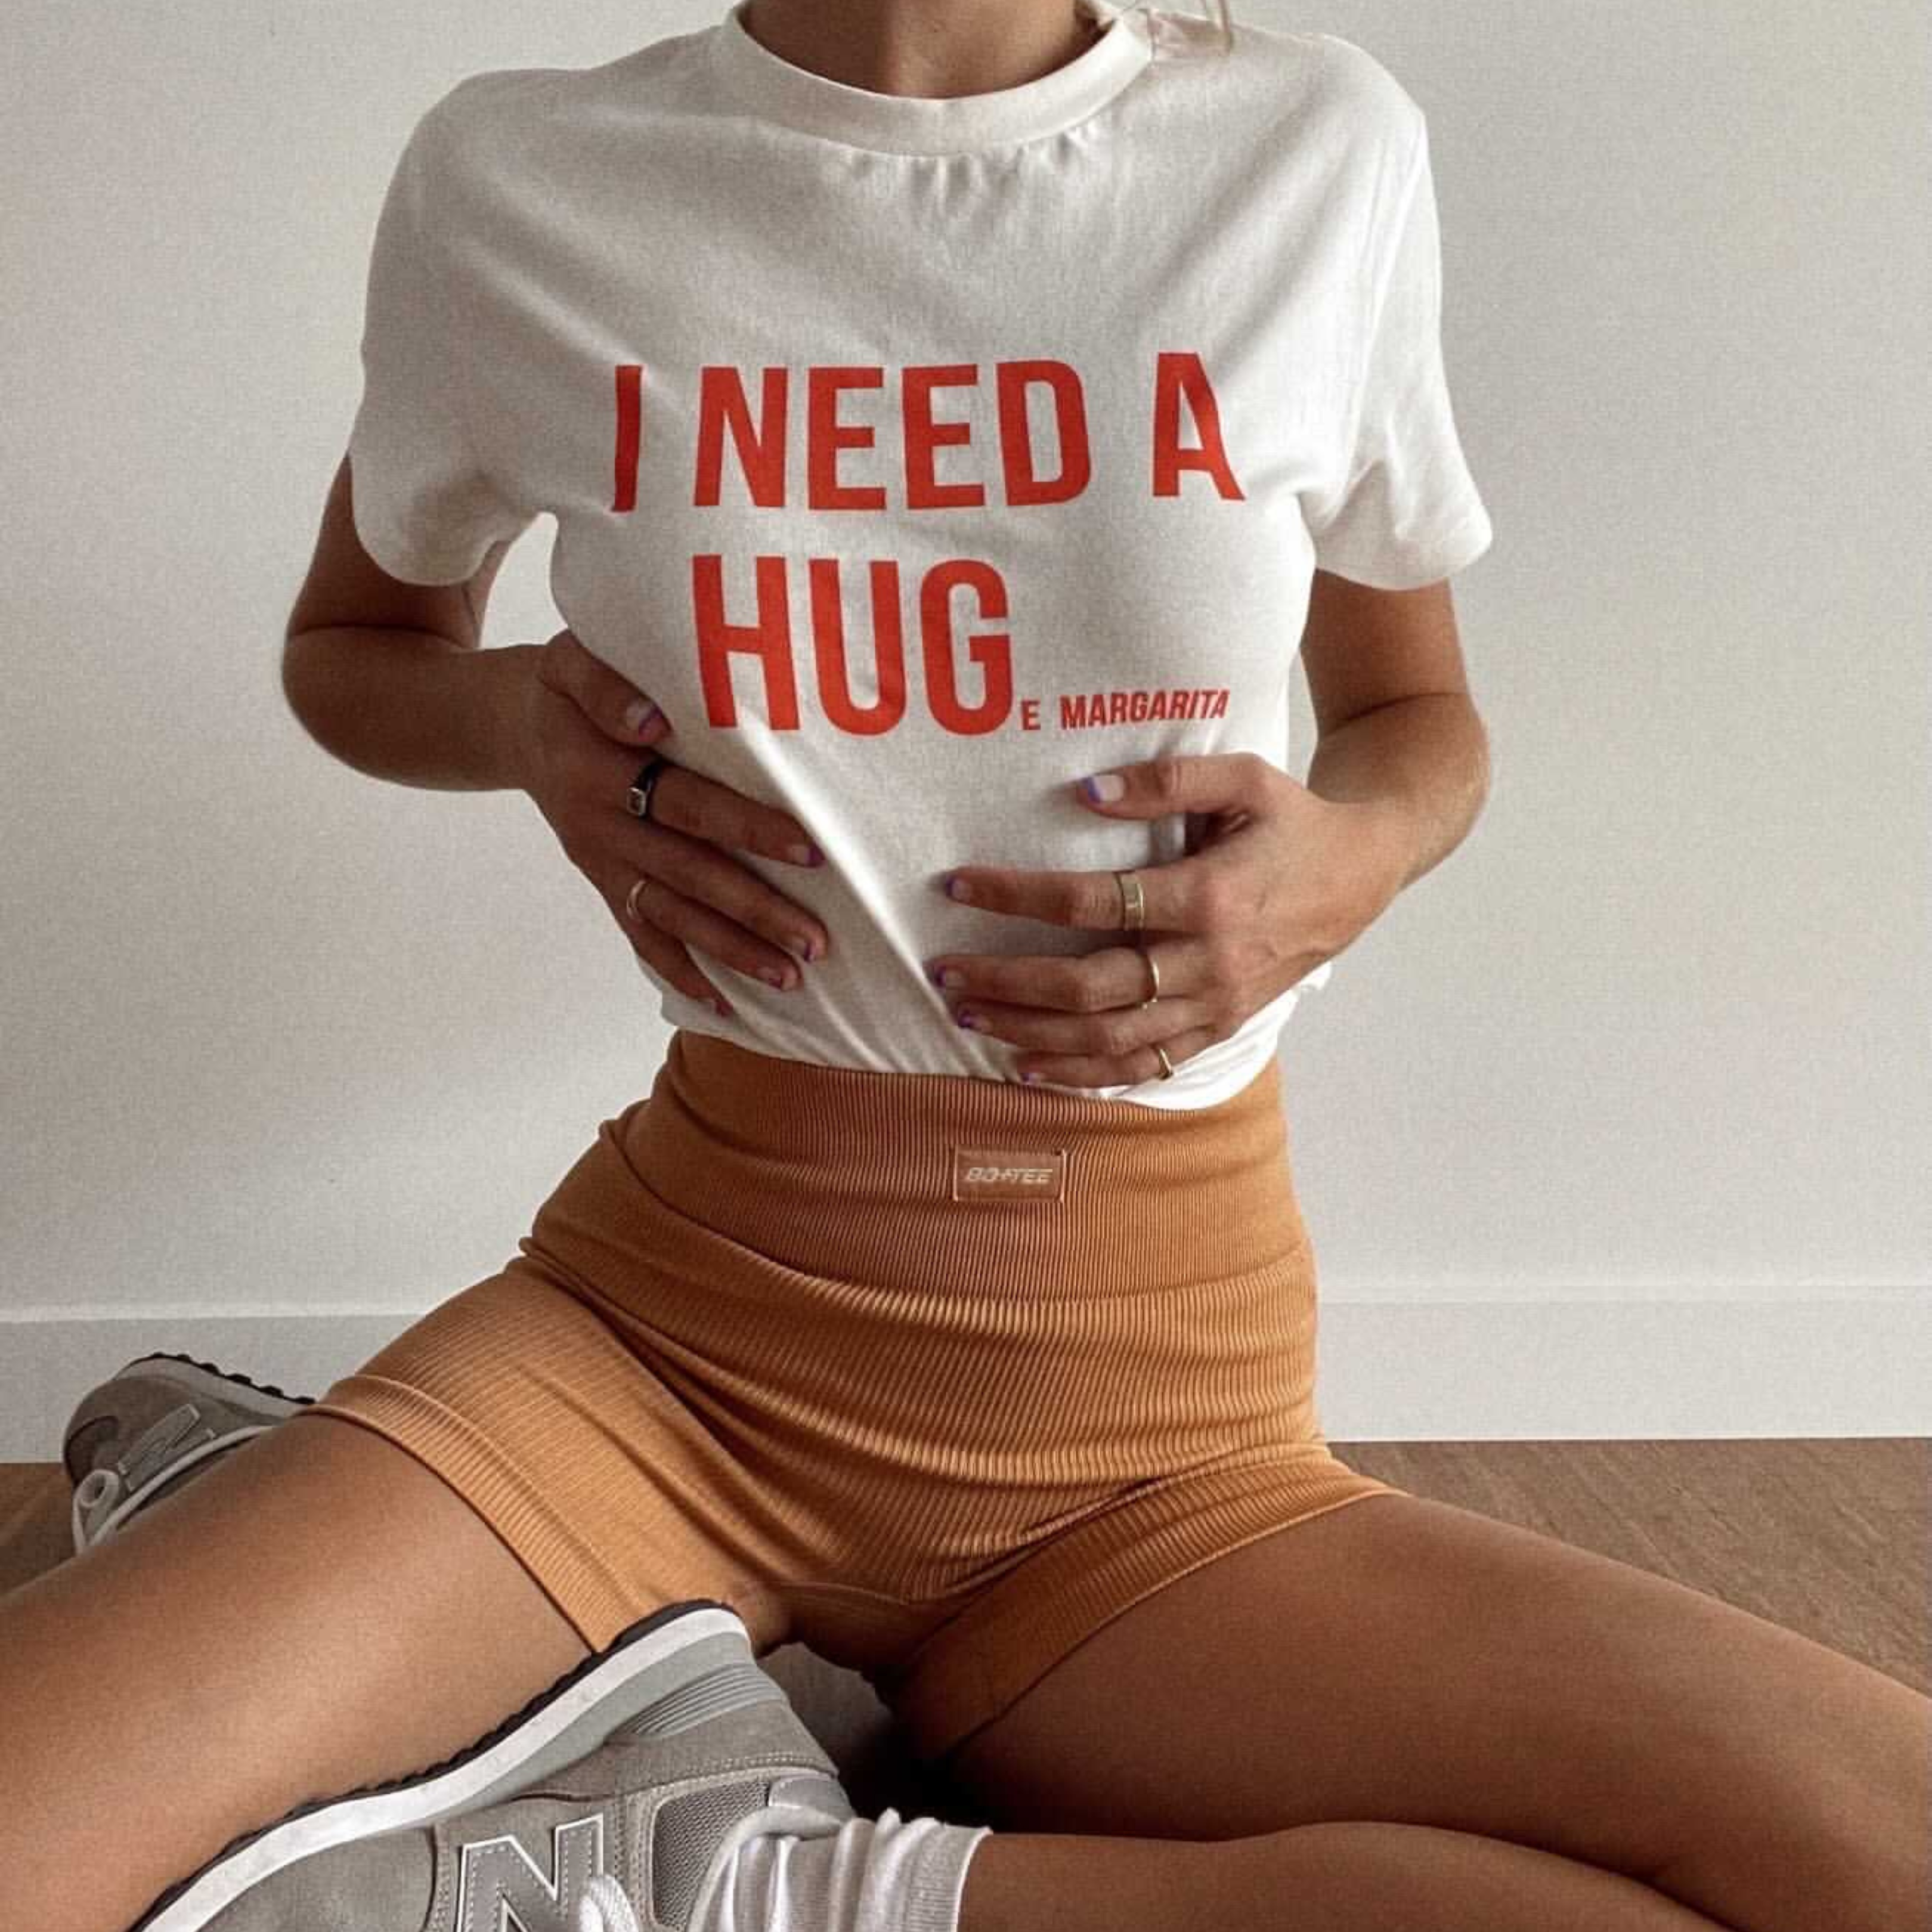 Girls with big boobs give the best hugs shirt - Kingteeshop